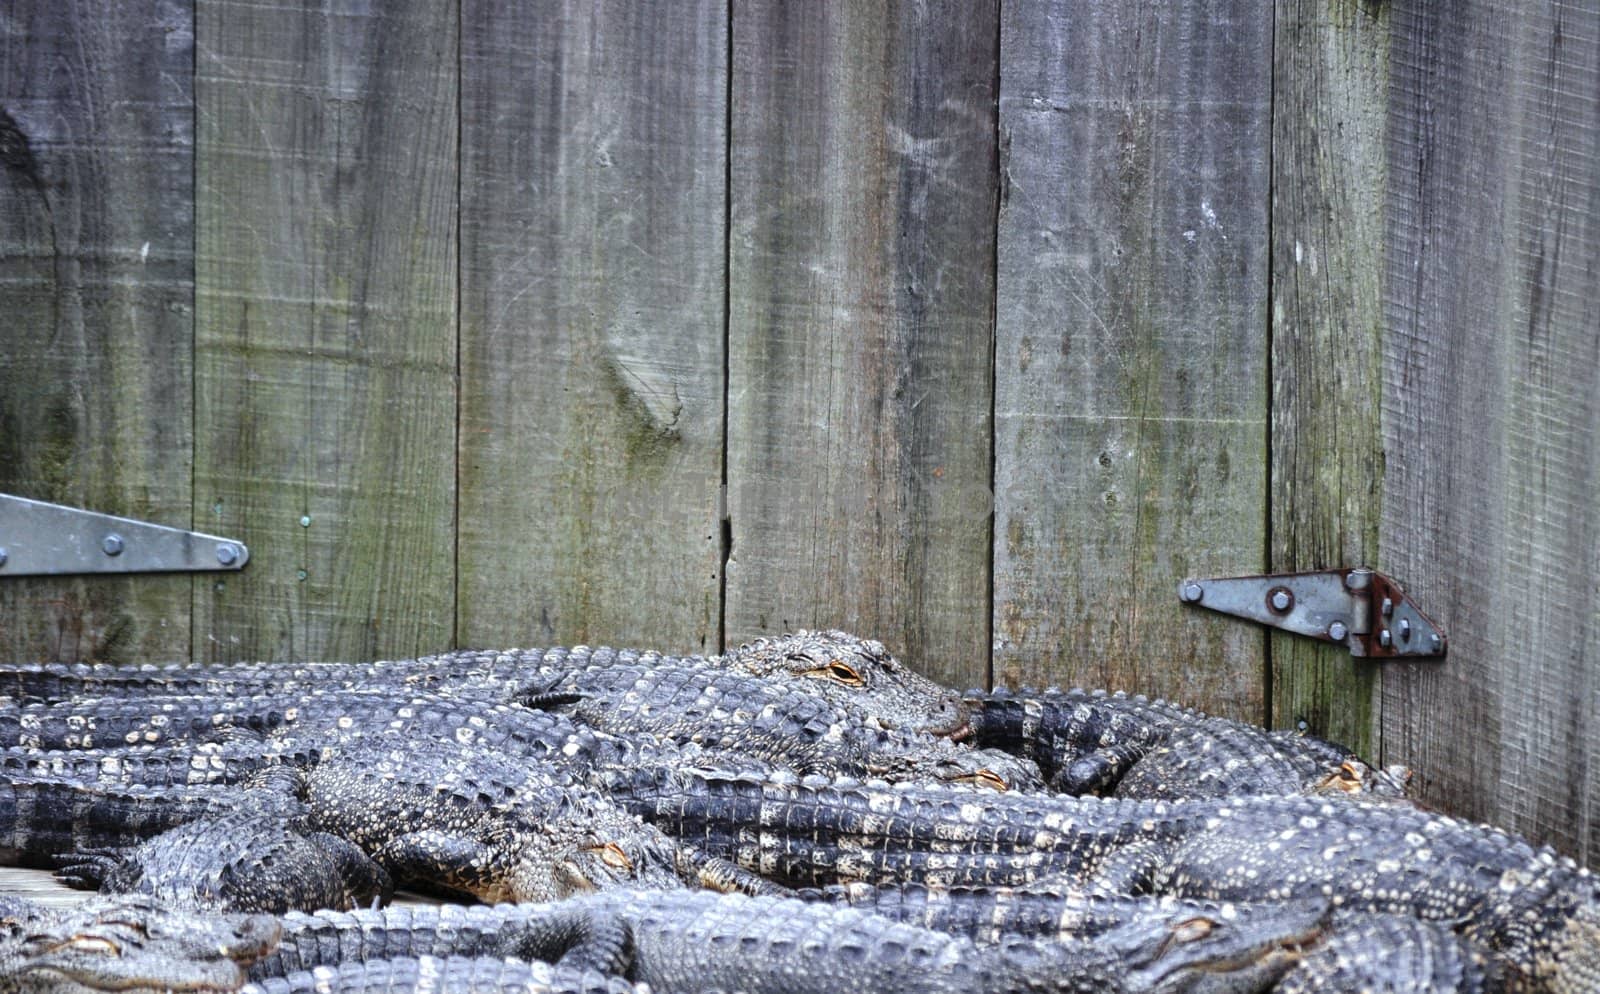 Alligator background